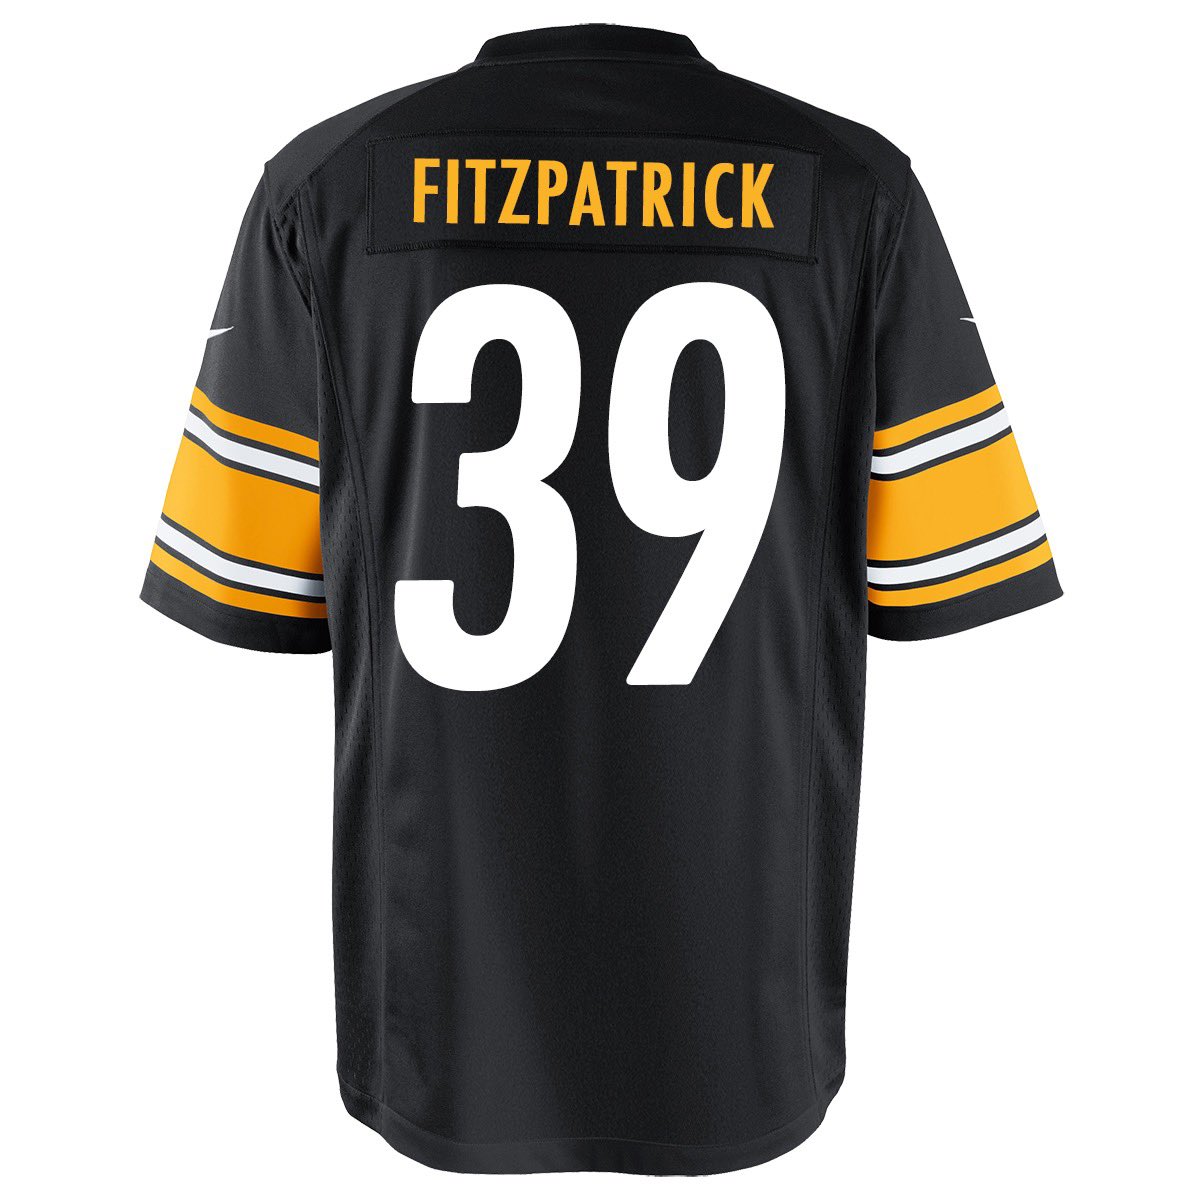 Minkah Fitzpatrick jerseys NOW!! SHOP 